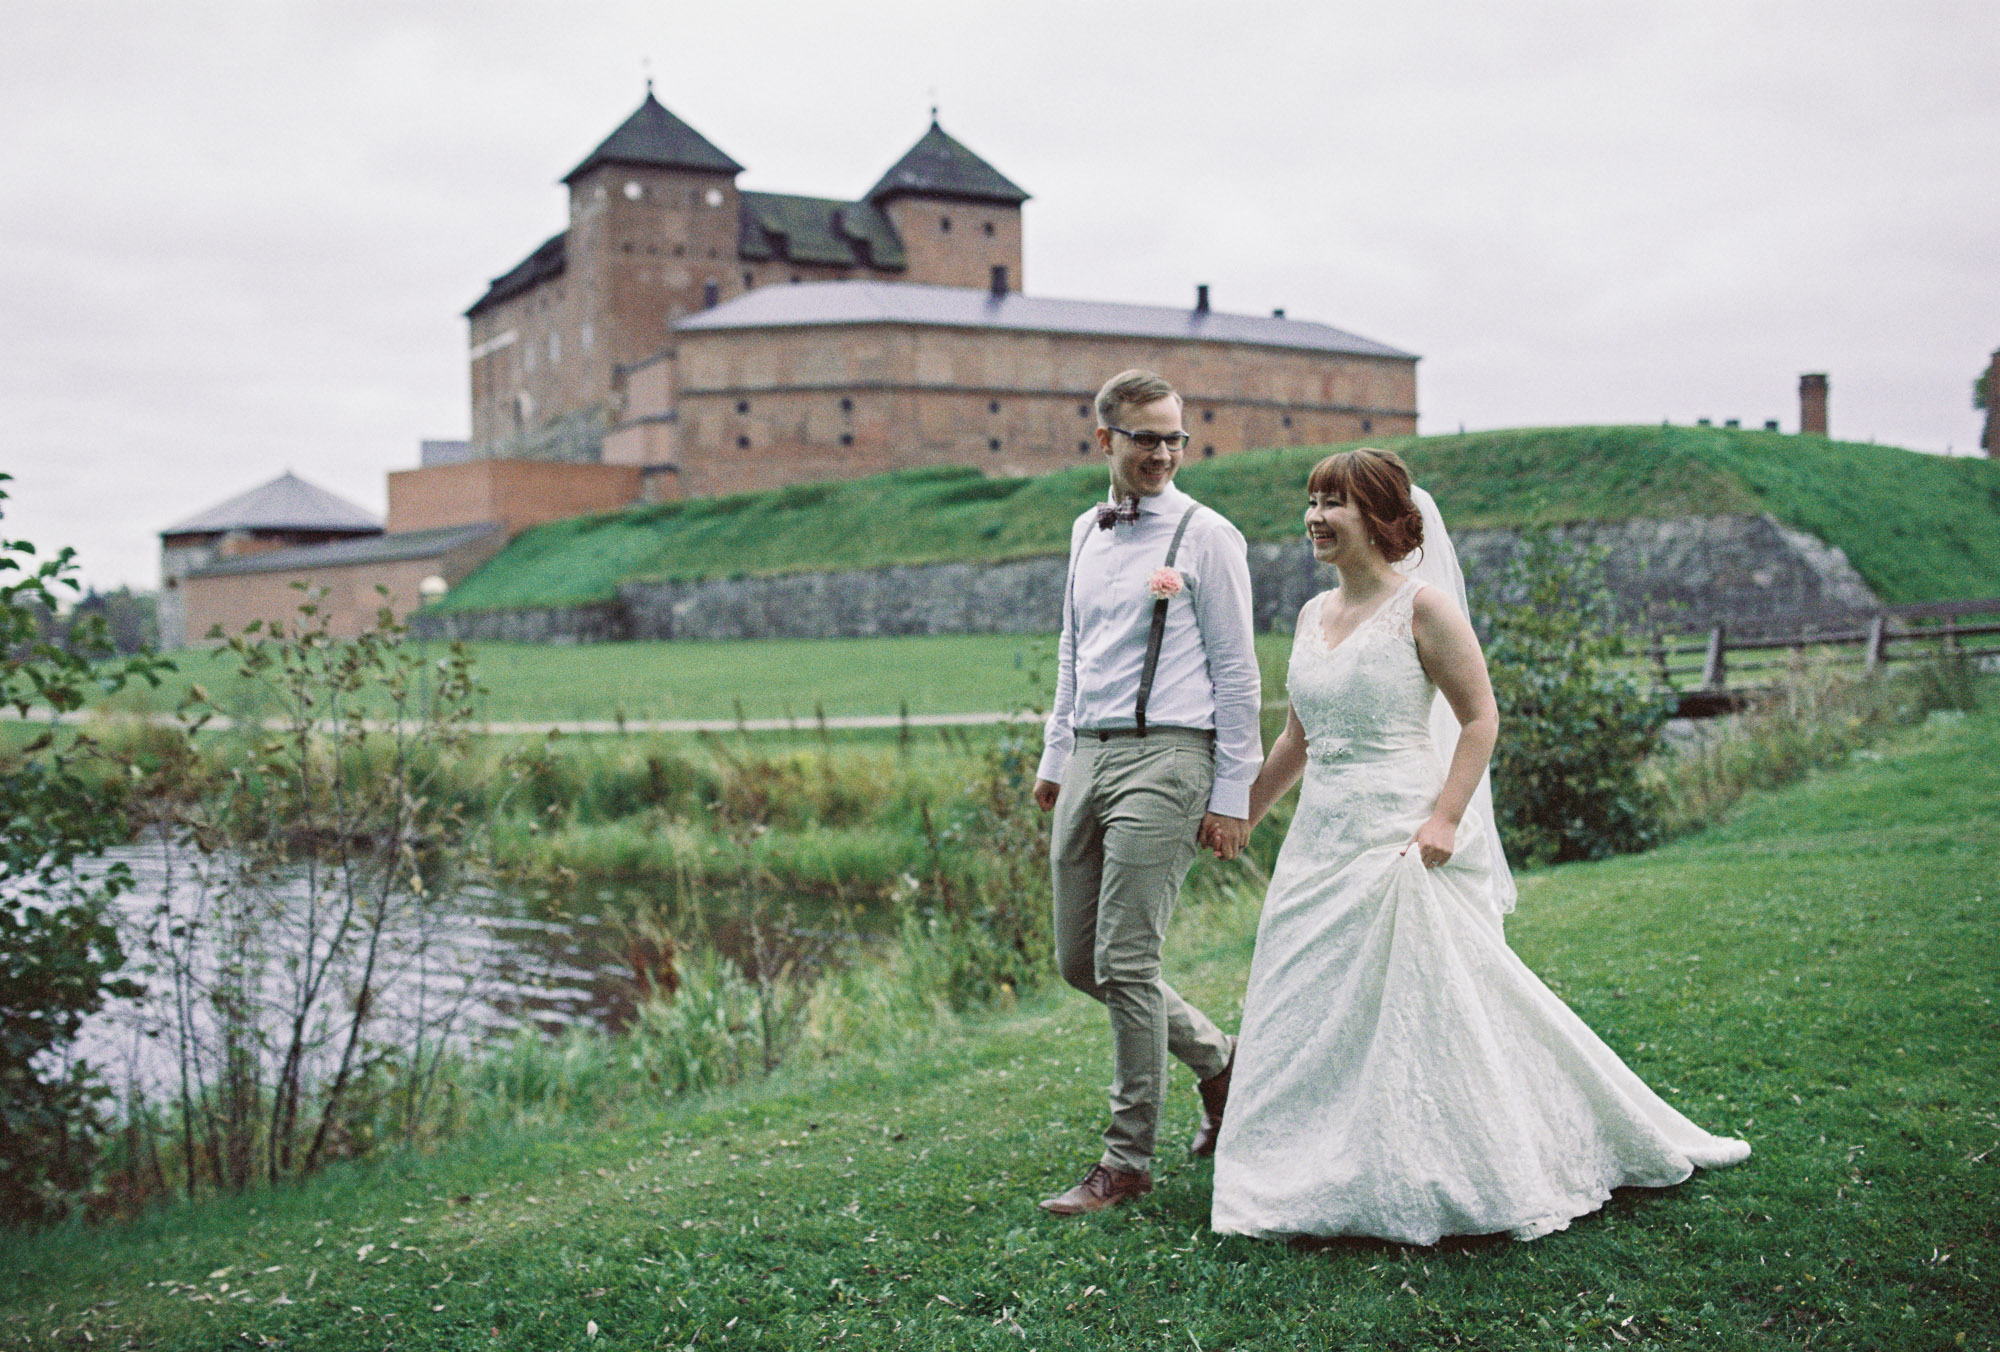 jere-satamo-analog-film-wedding-photographer-finland-146.jpg